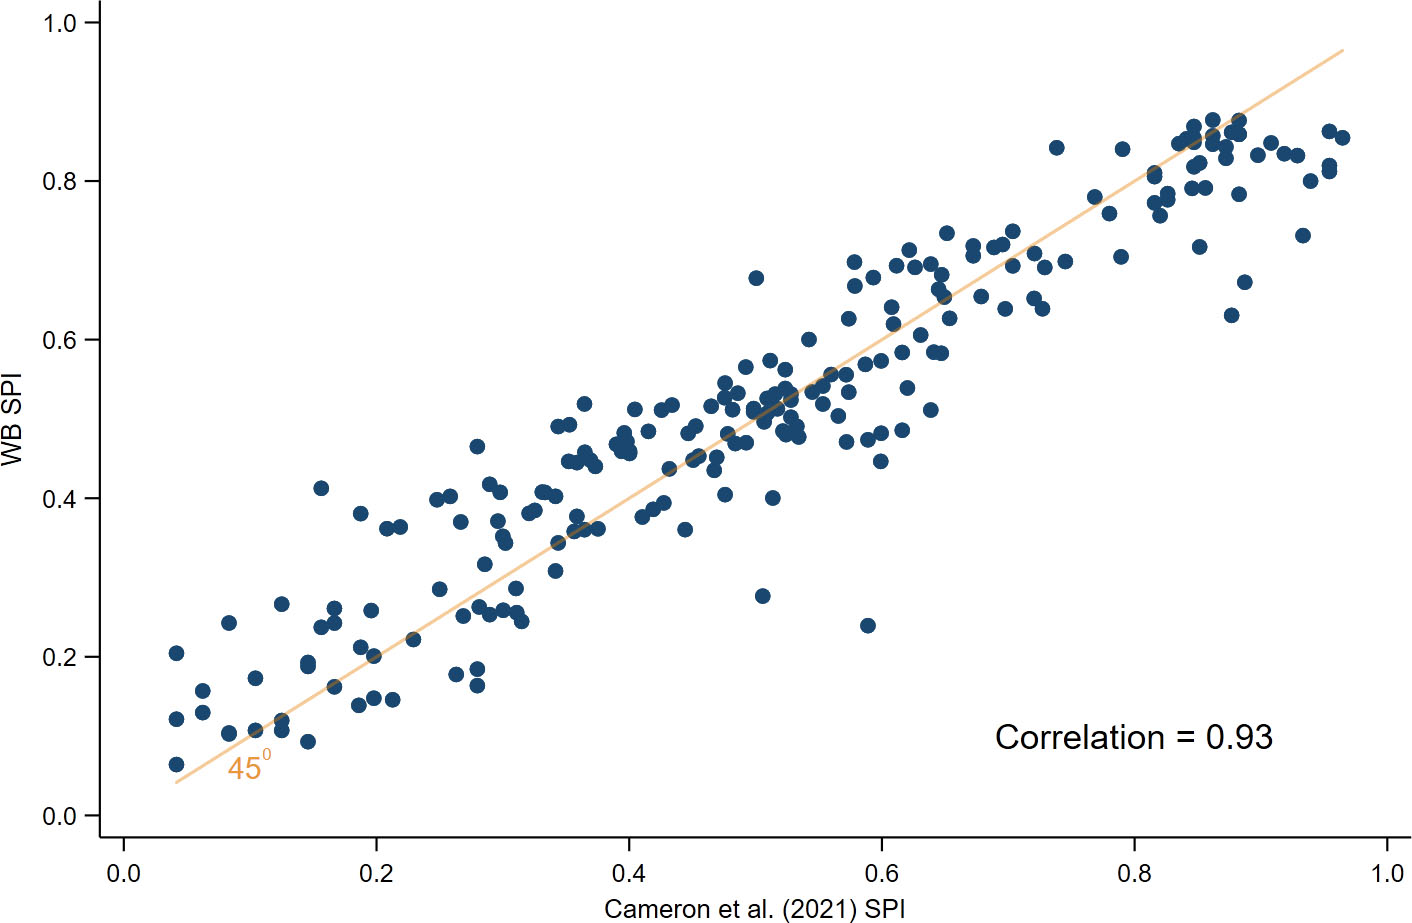 Correlation between Cameron et al. (2021) and the World Bank Statistical Performance Indicator (SPI).